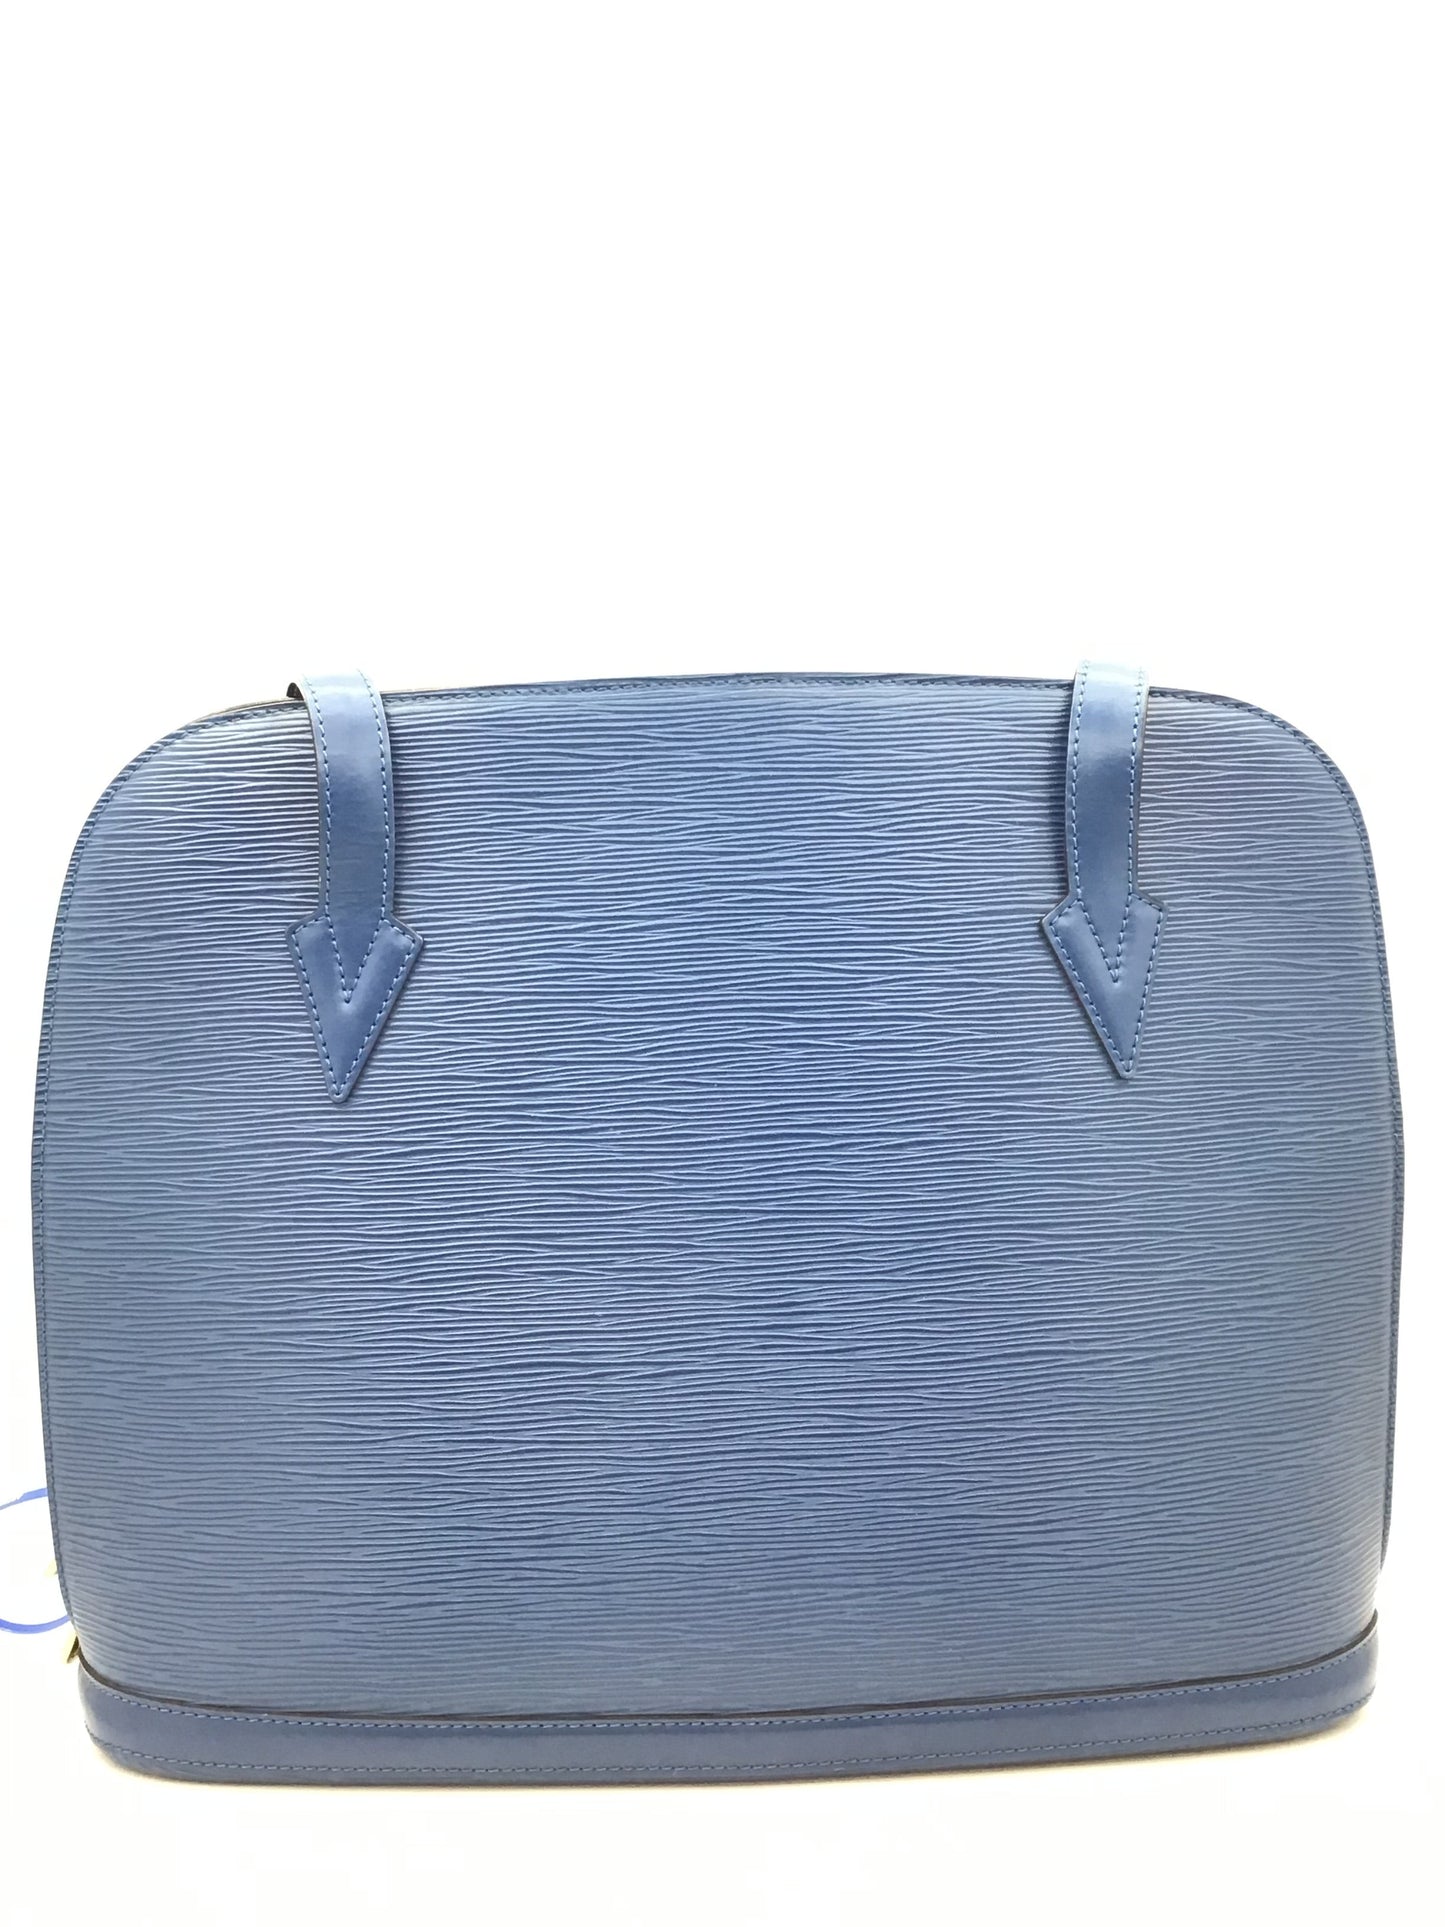 Toledo Blue Epi Leather Lussac Tote Bag By Louis Vuitton  Size: Large